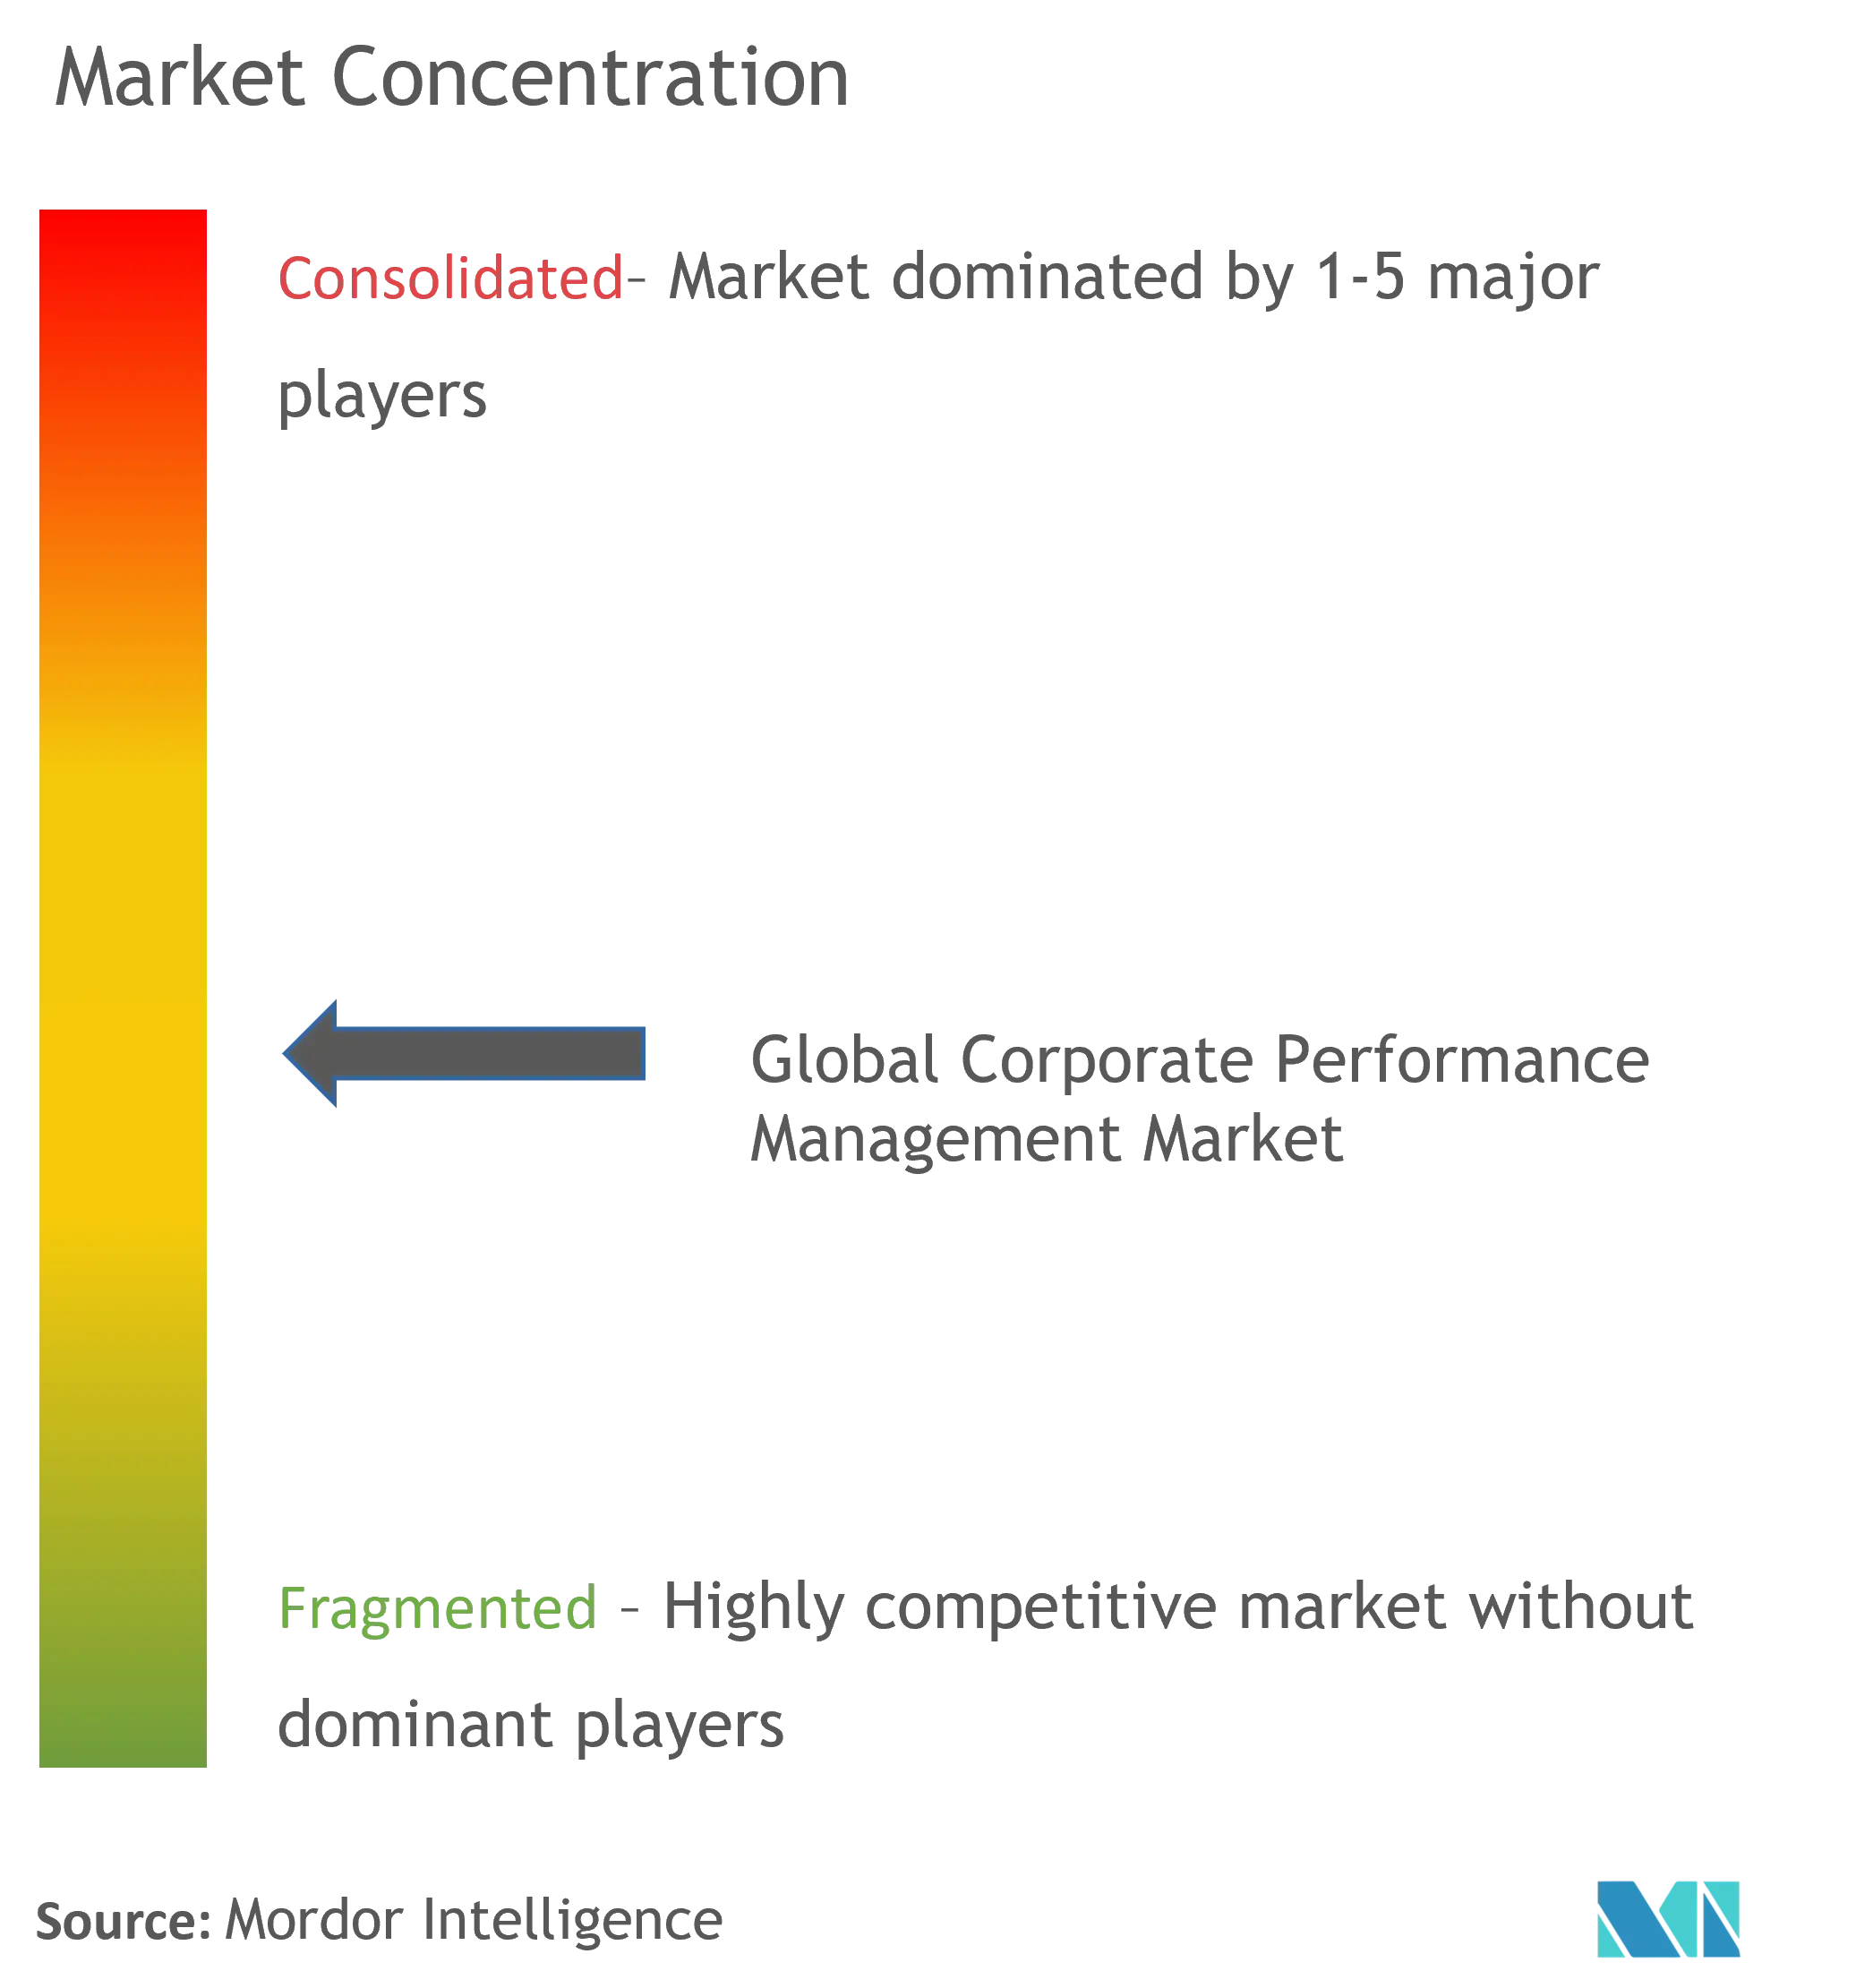 Corporate Performance Management Market Concentration